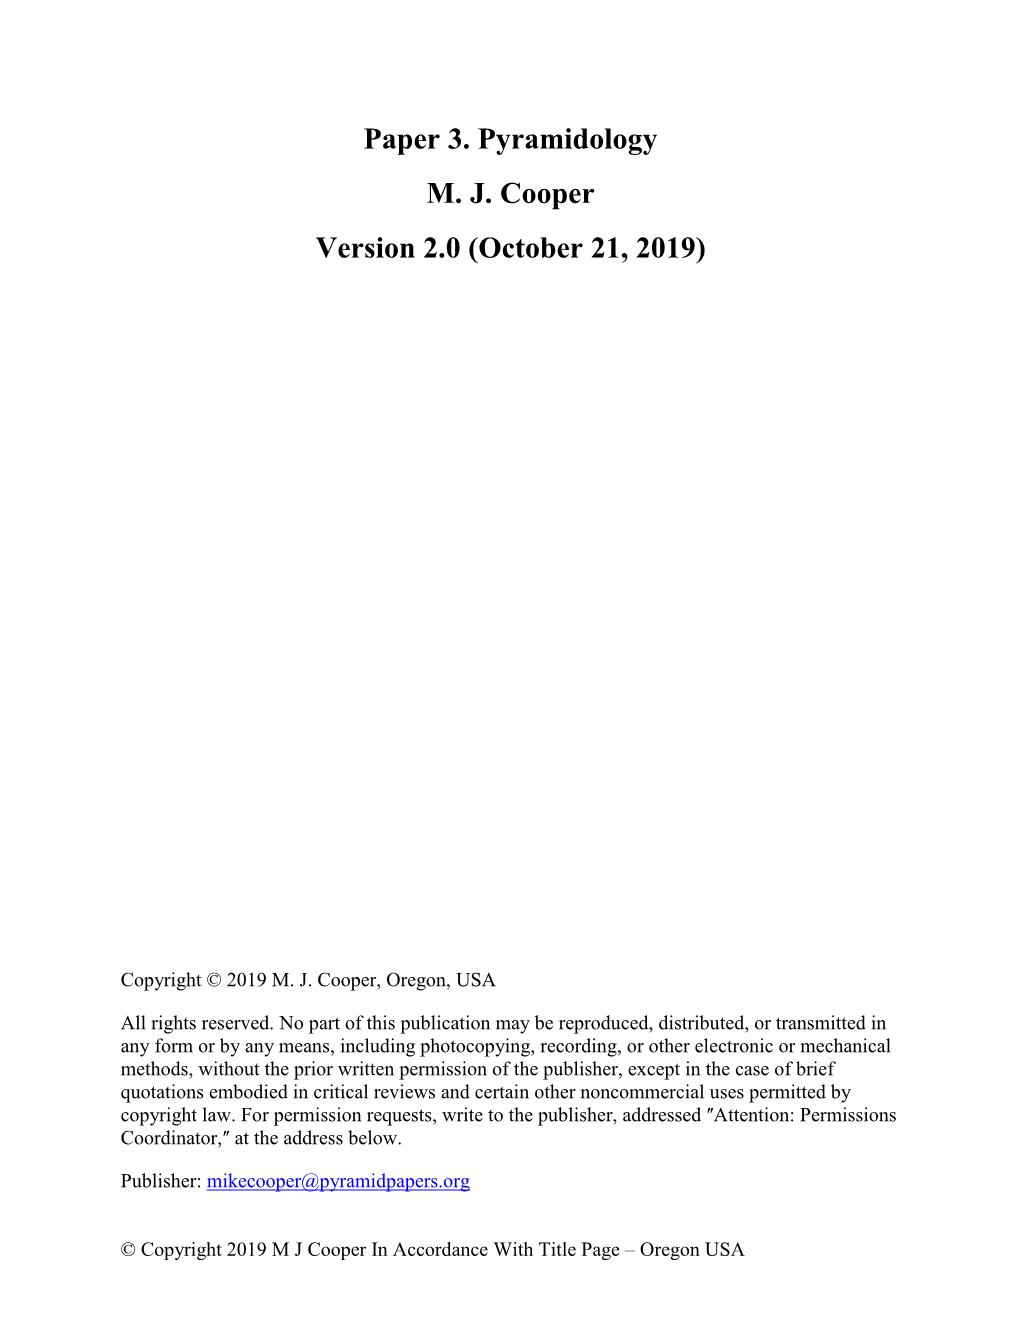 Paper 3. Pyramidology M. J. Cooper Version 2.0 (October 21, 2019)